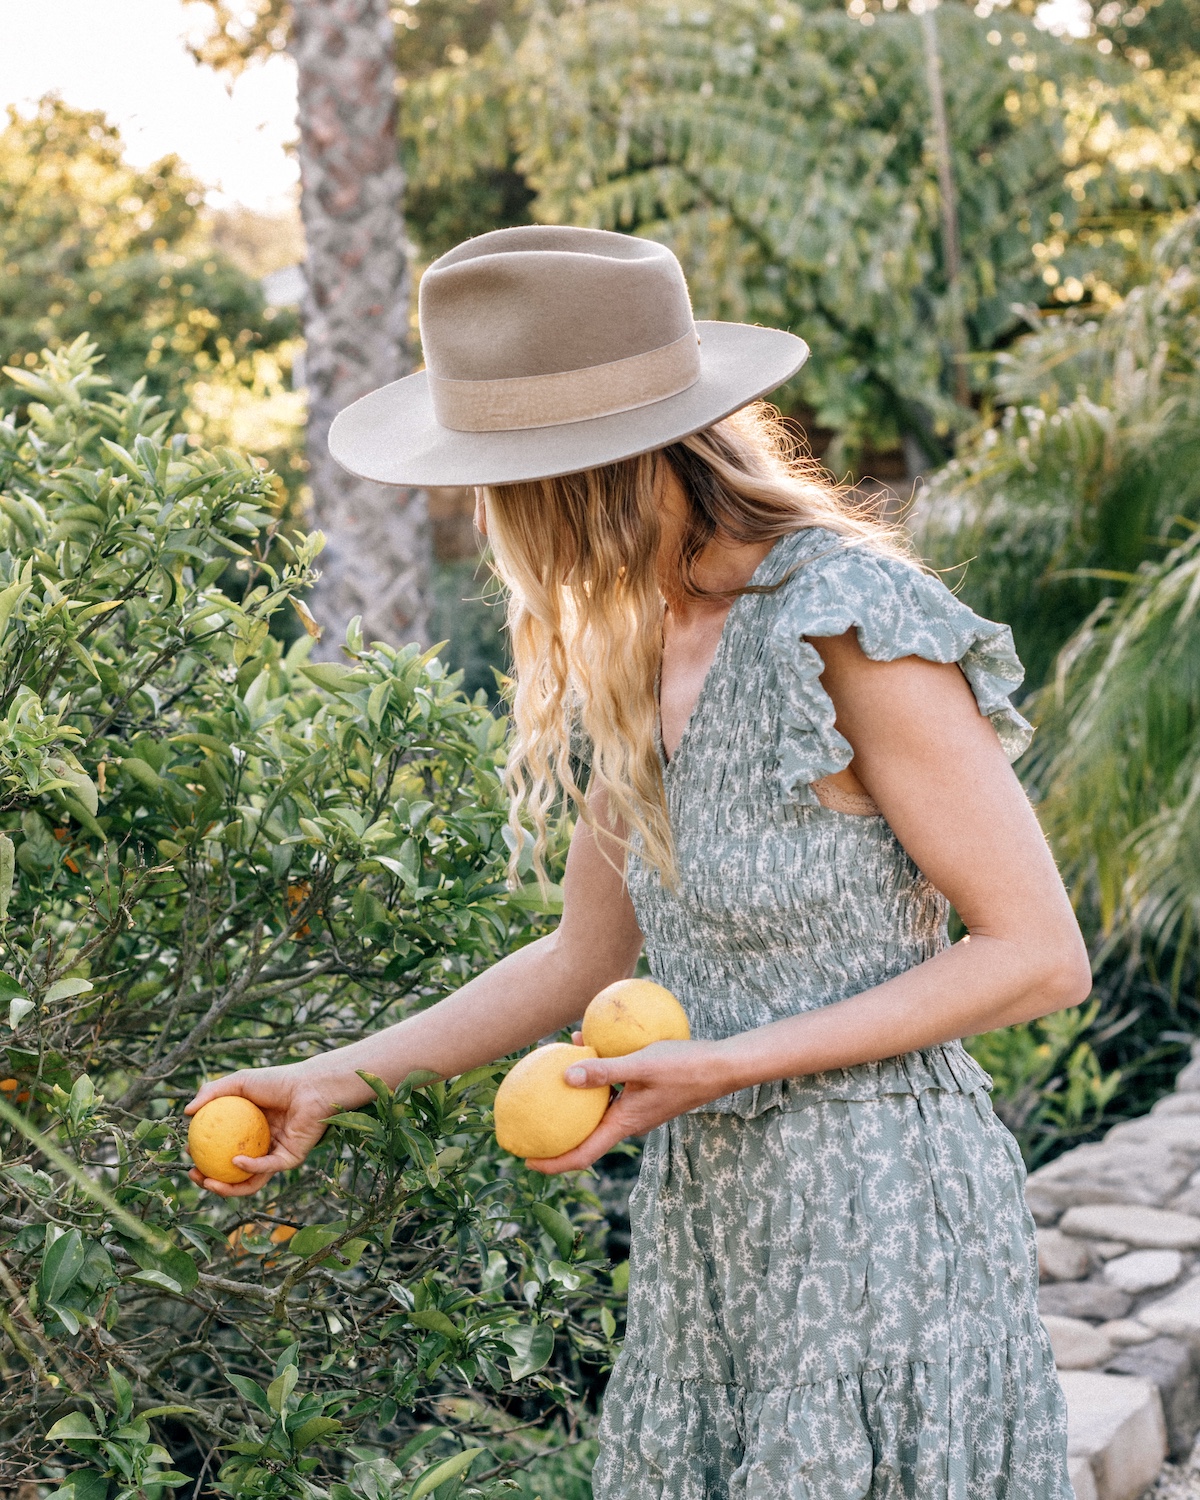 jessie de lowe gathering lemons from the garden, citrus, summer